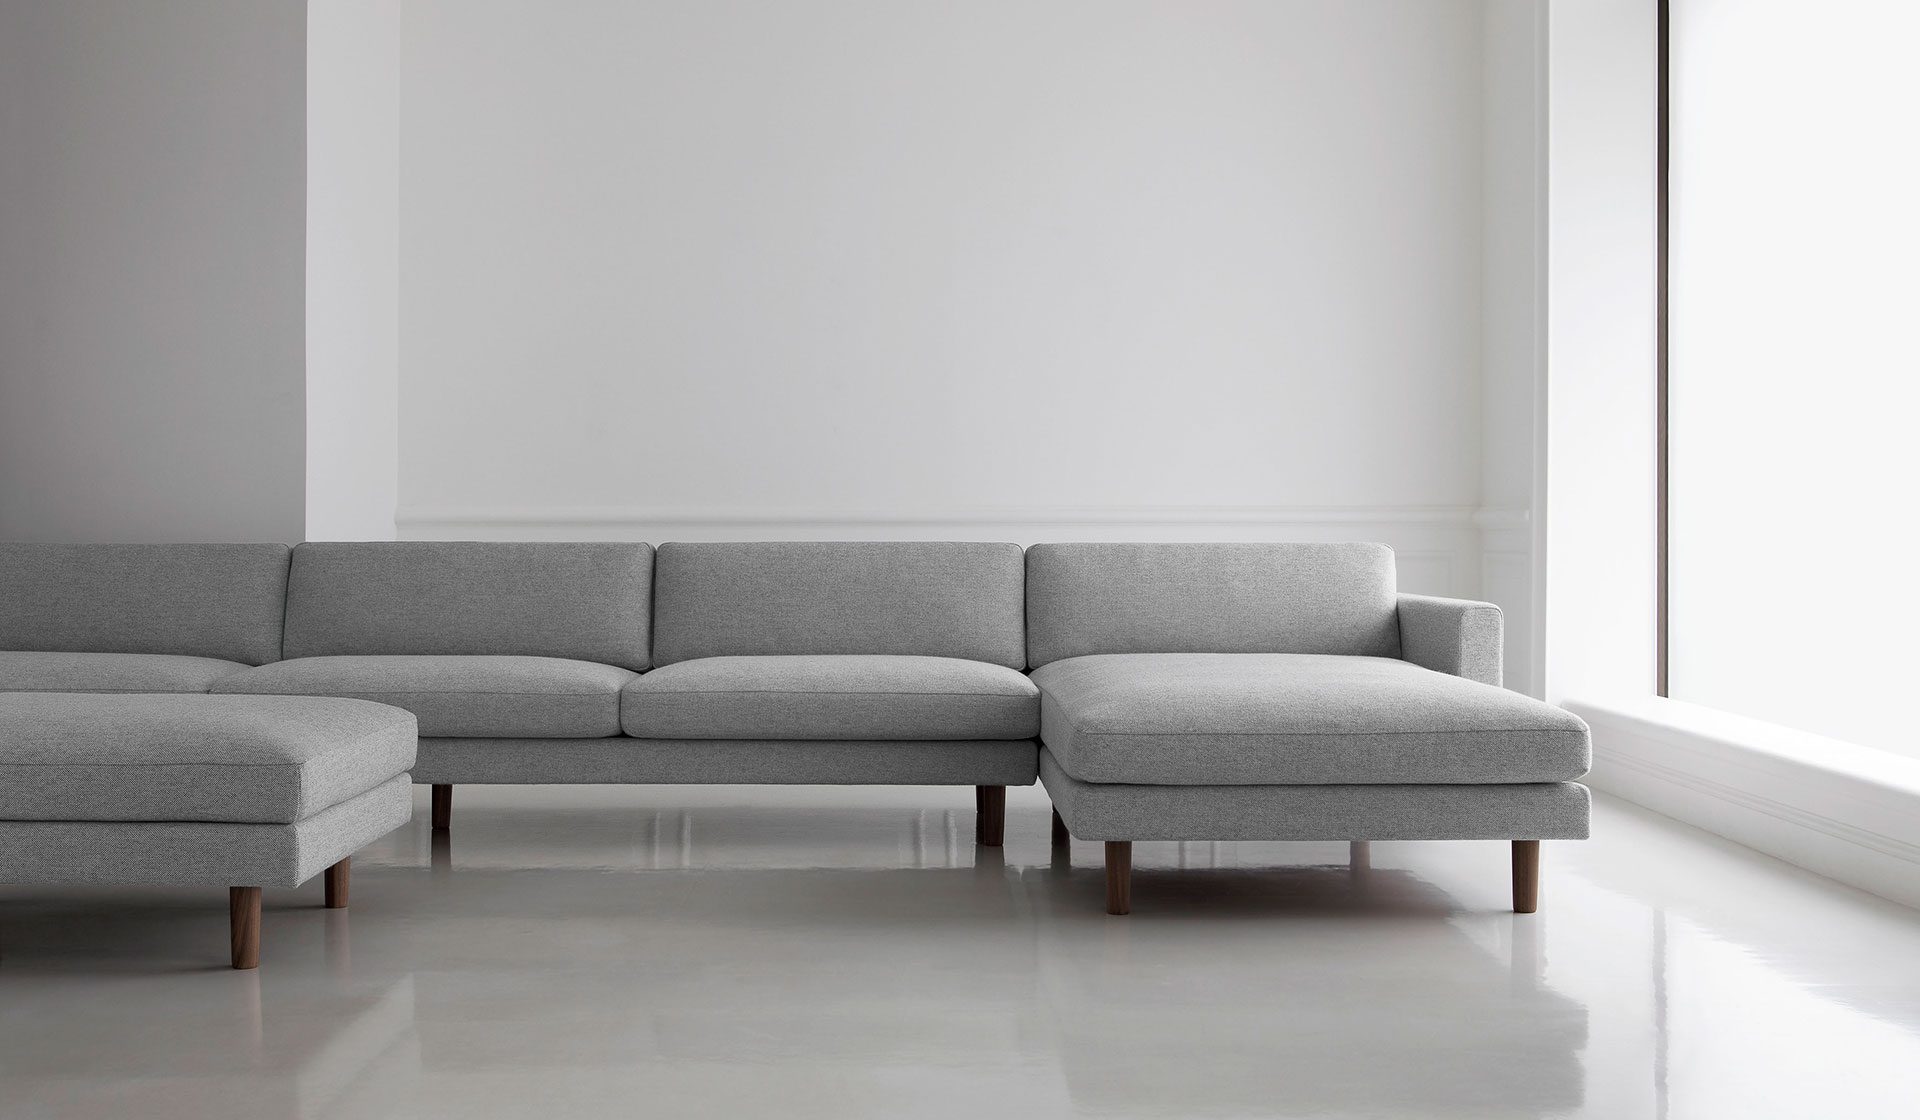 Maruni Wide-Type Hiroshima sofa designed by Naoto Fukasawa